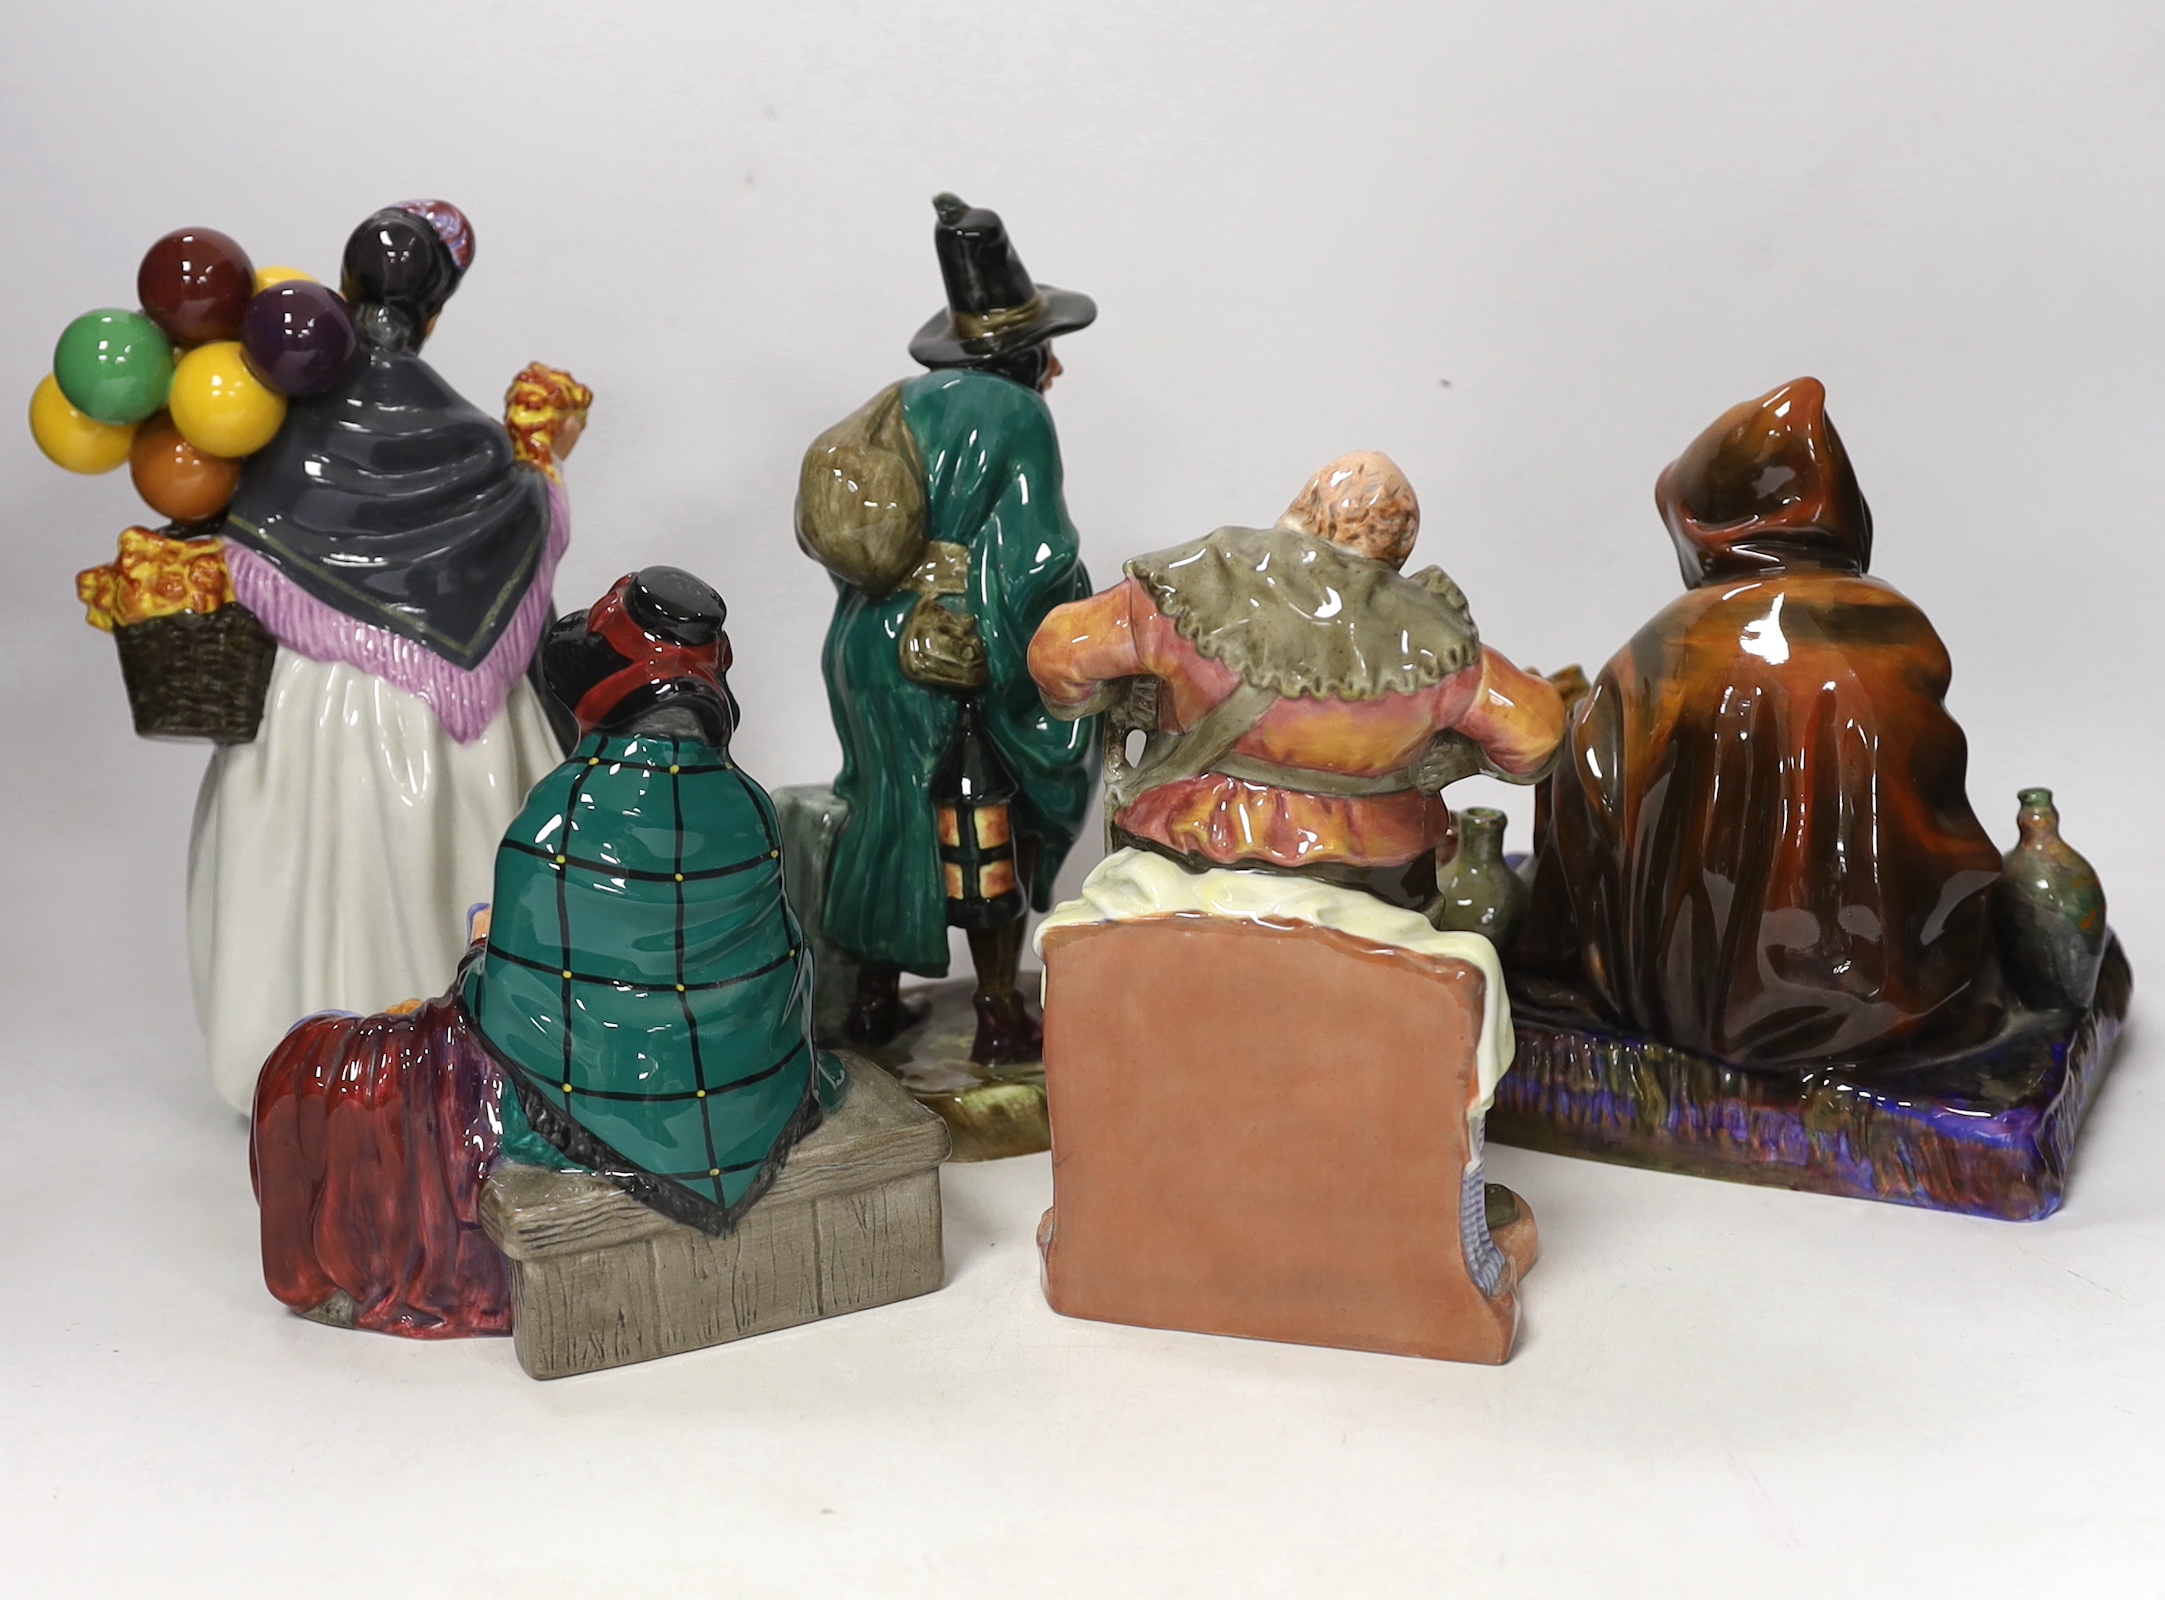 Five Royal Doulton figures, The Potter HN 1493, The Mask Seller, HN 2103, Falstaff HN 2054, Silks and Ribbons HN 2017 and Biddy Penny Farthing HN1843